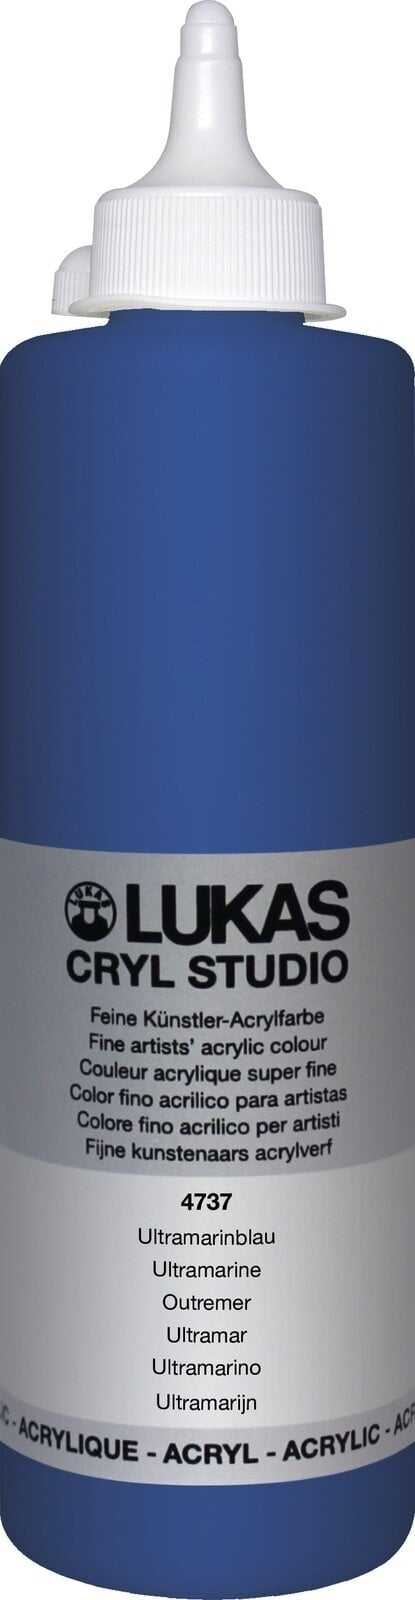 Acrylic Paint Lukas Cryl Studio Acrylic Paint Plastic Bottle Acrylic Paint Ultramarine 500 ml 1 pc